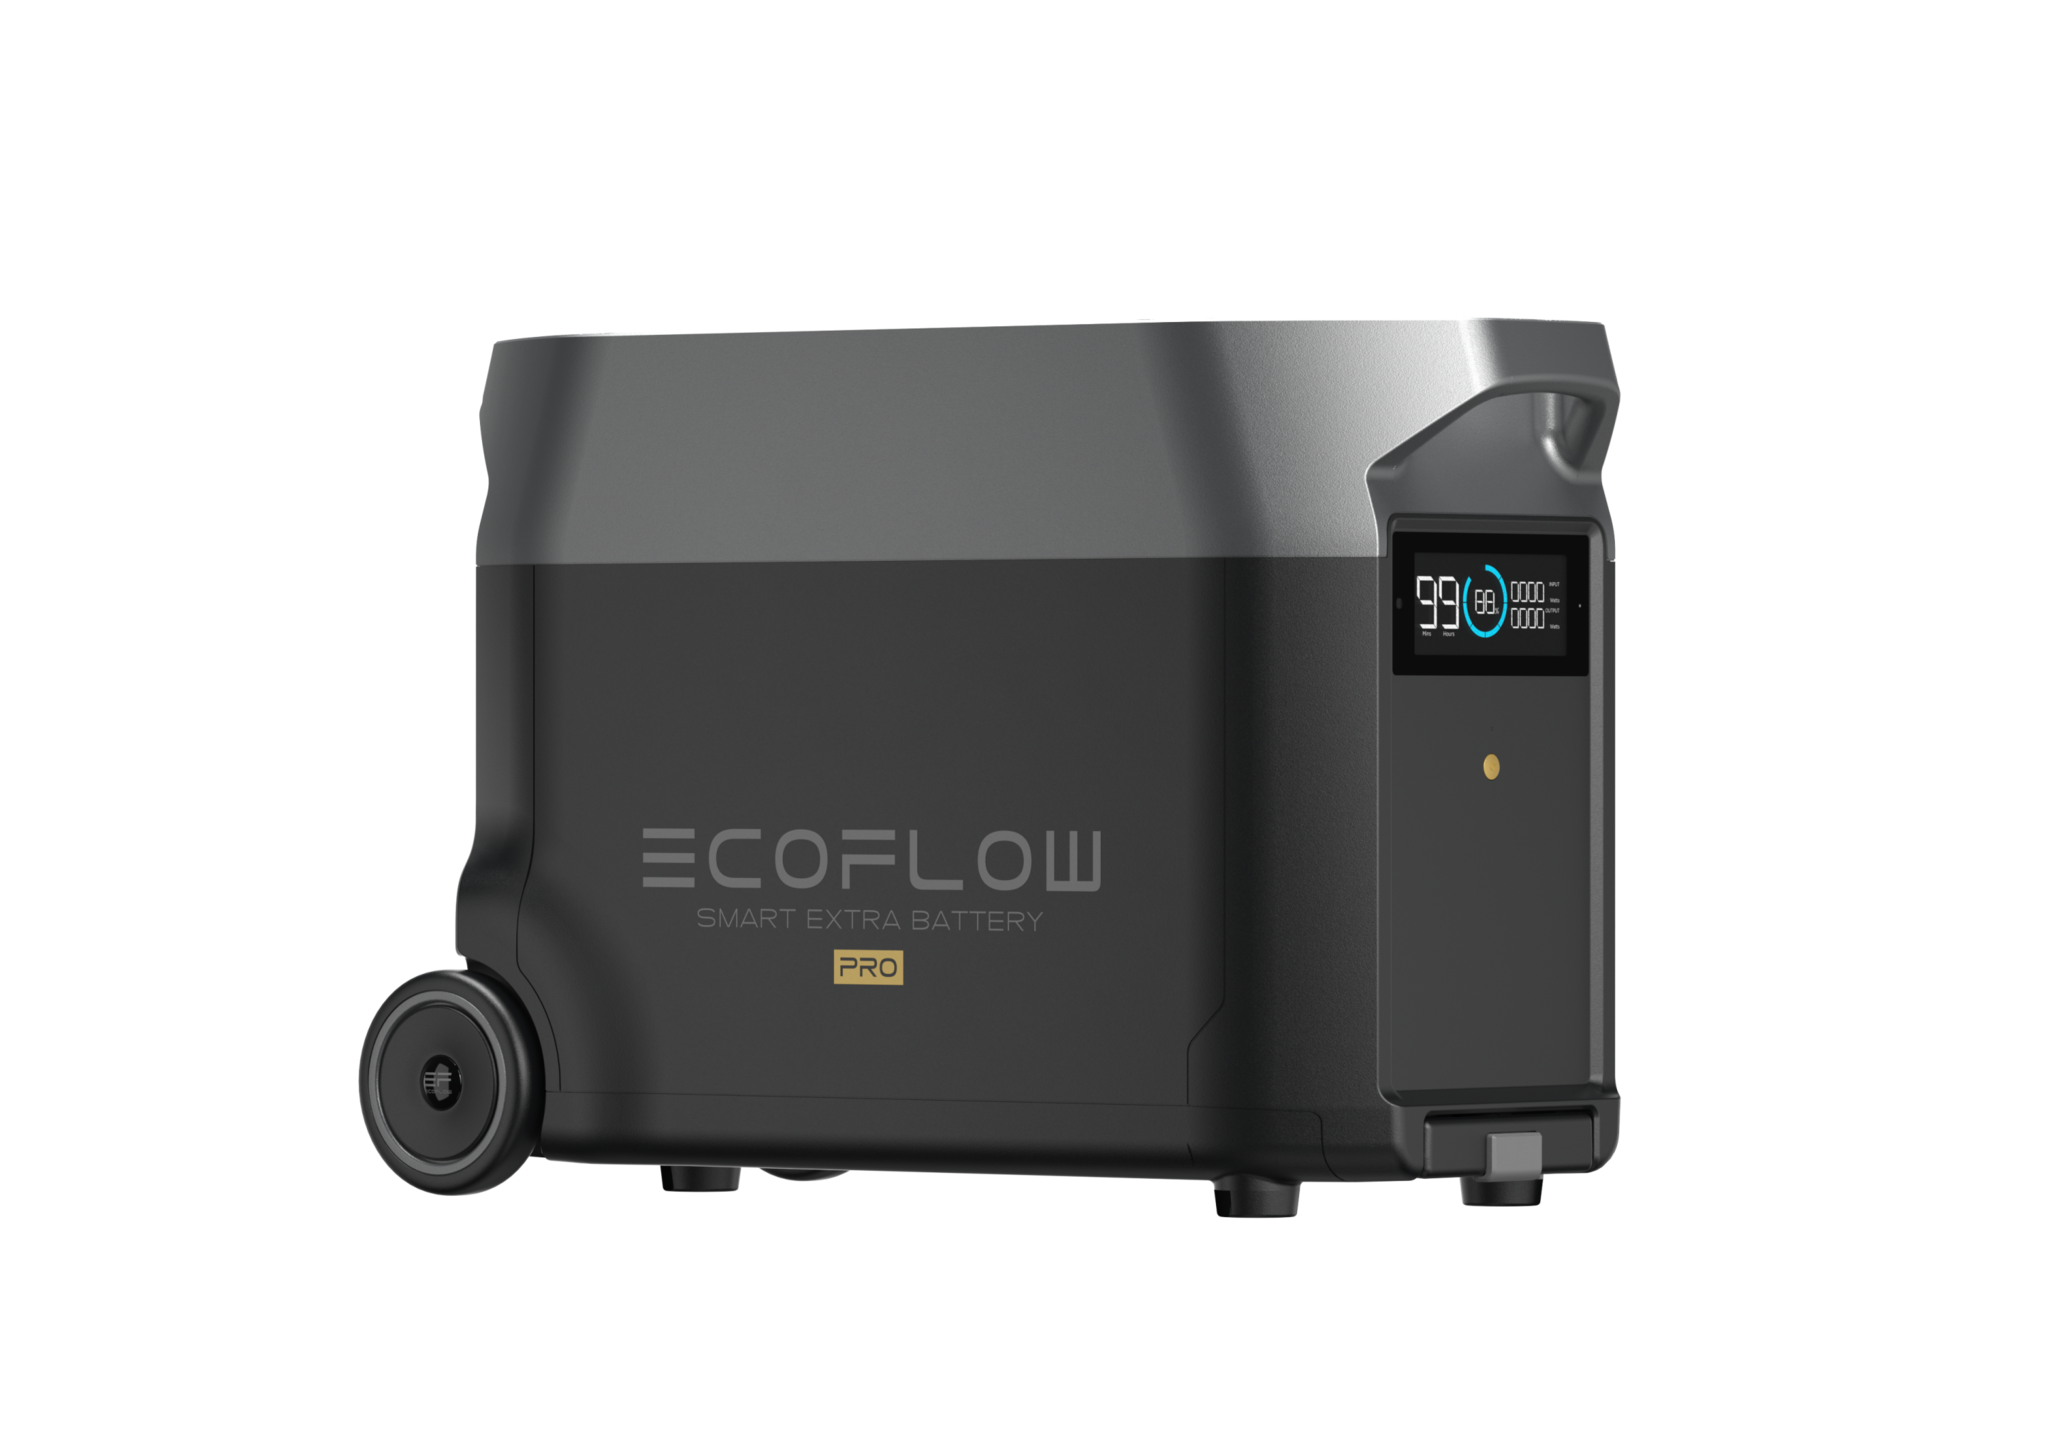 Bateria adicional Ecoflow Delta Pro